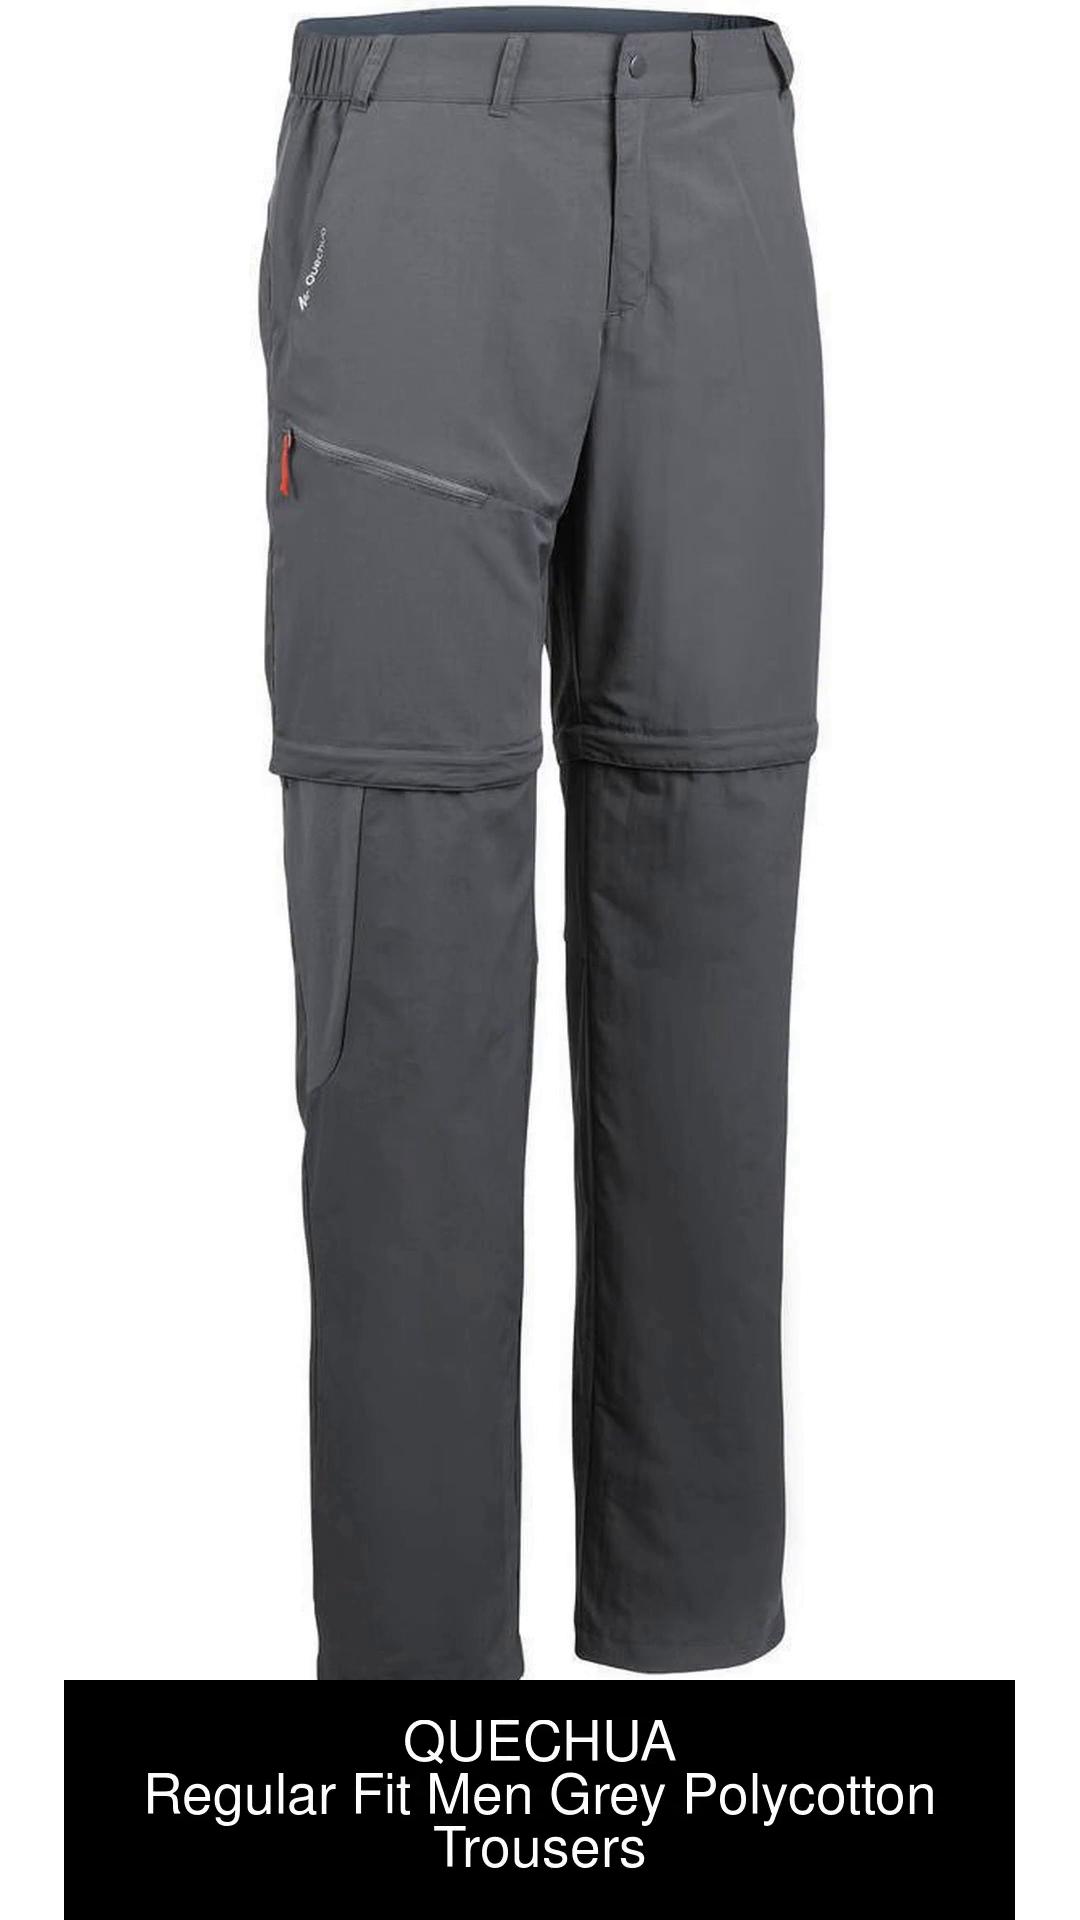 QUECHUA by DECATHLON - Men's MH150 Convertible Hiking Pants